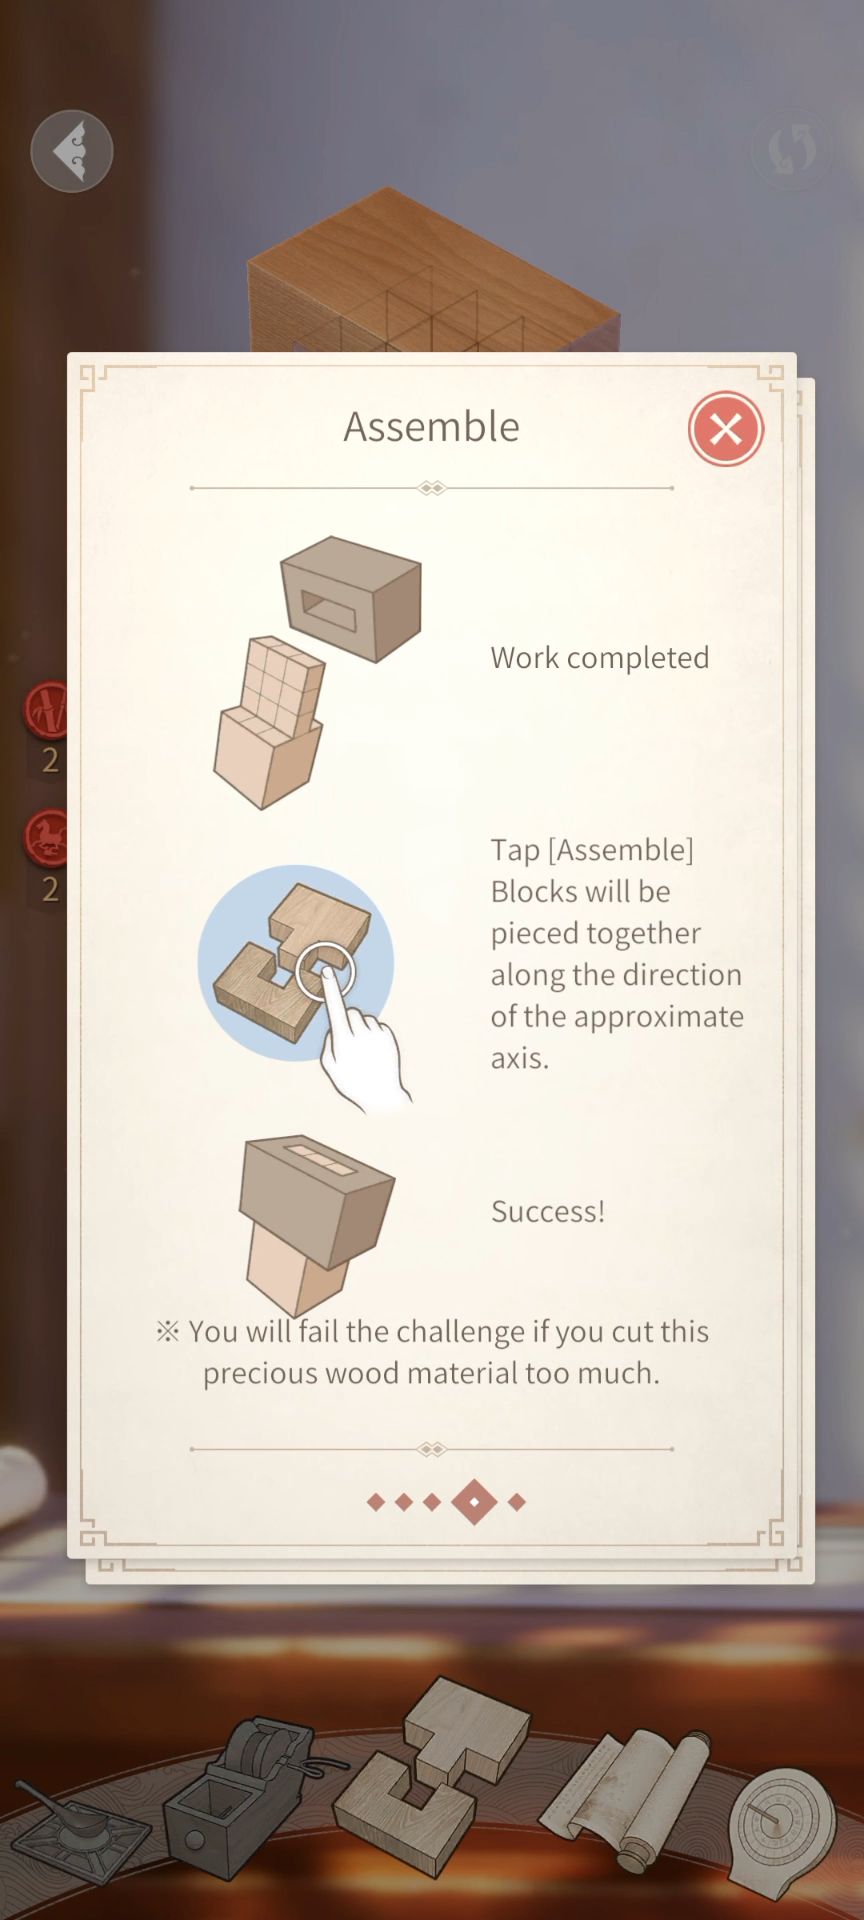 Mudoku: Chinese Woodcraft - Android game screenshots.